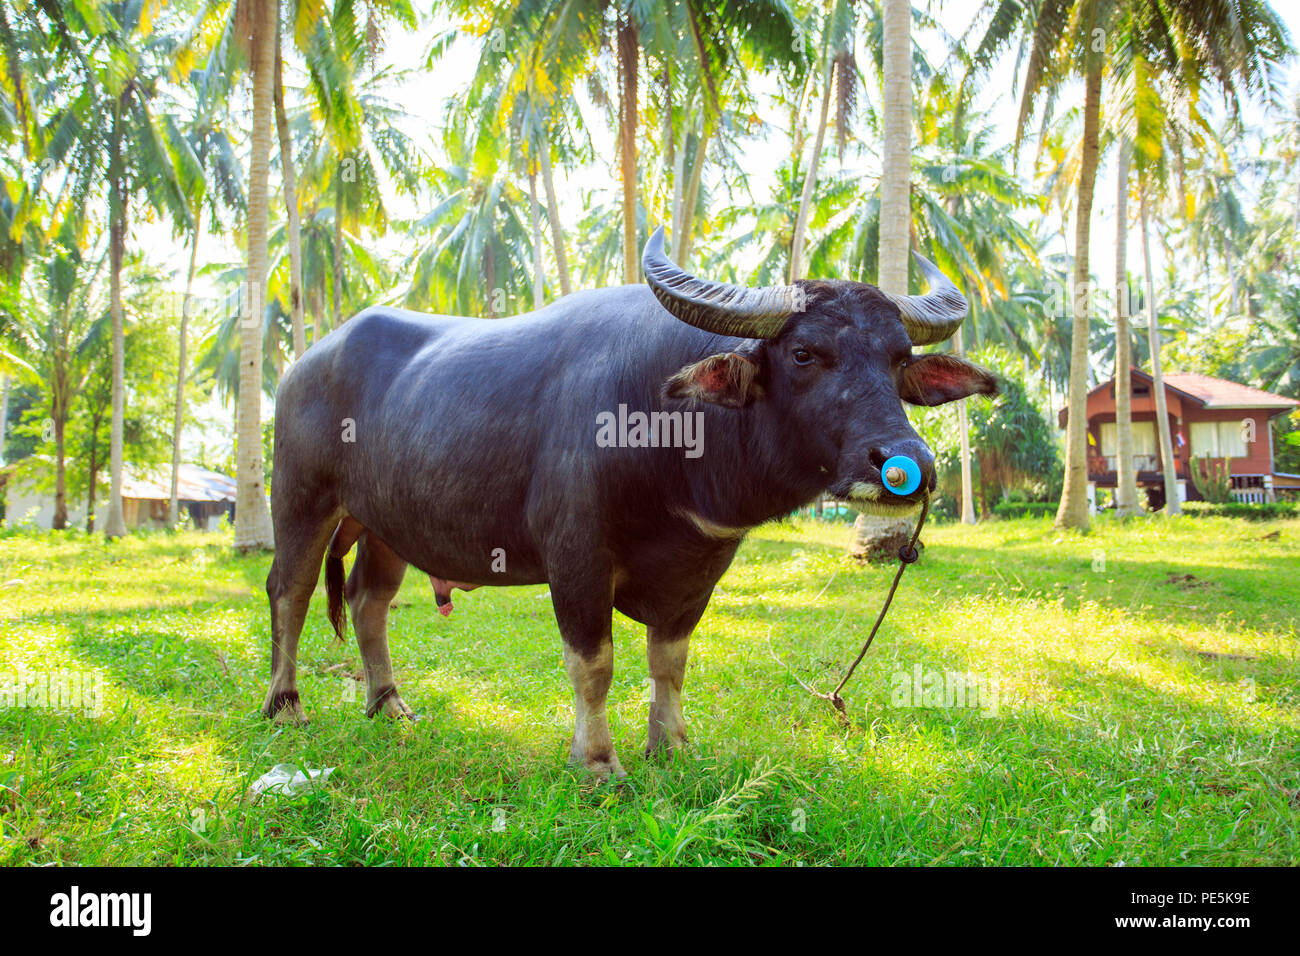 Water buffalo in Thailand Koh Samui island Stock Photo - Alamy